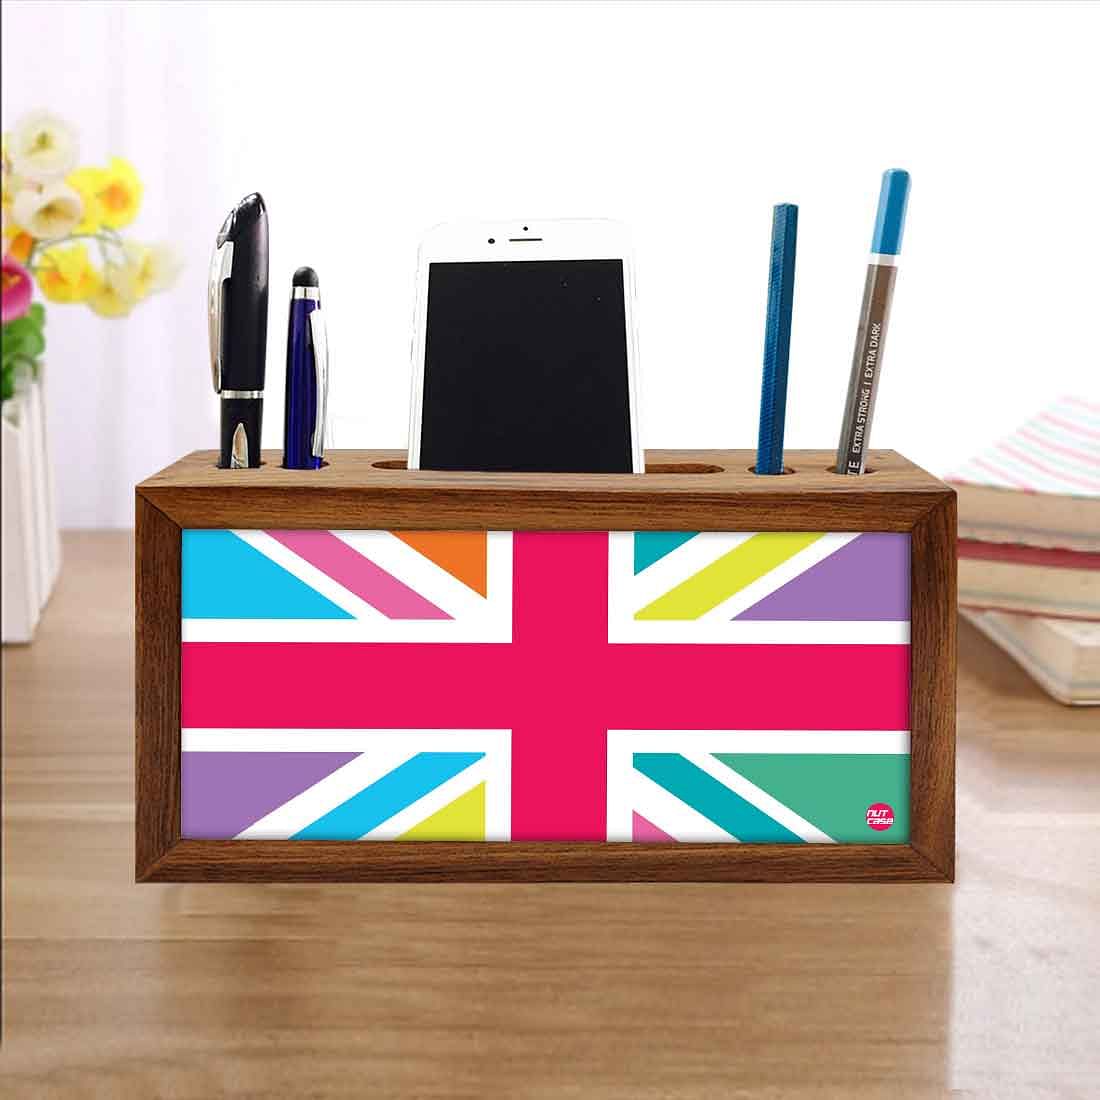 Wooden desk caddy Pen Mobile Stand - Multicolor Union Jack British Flag Nutcase